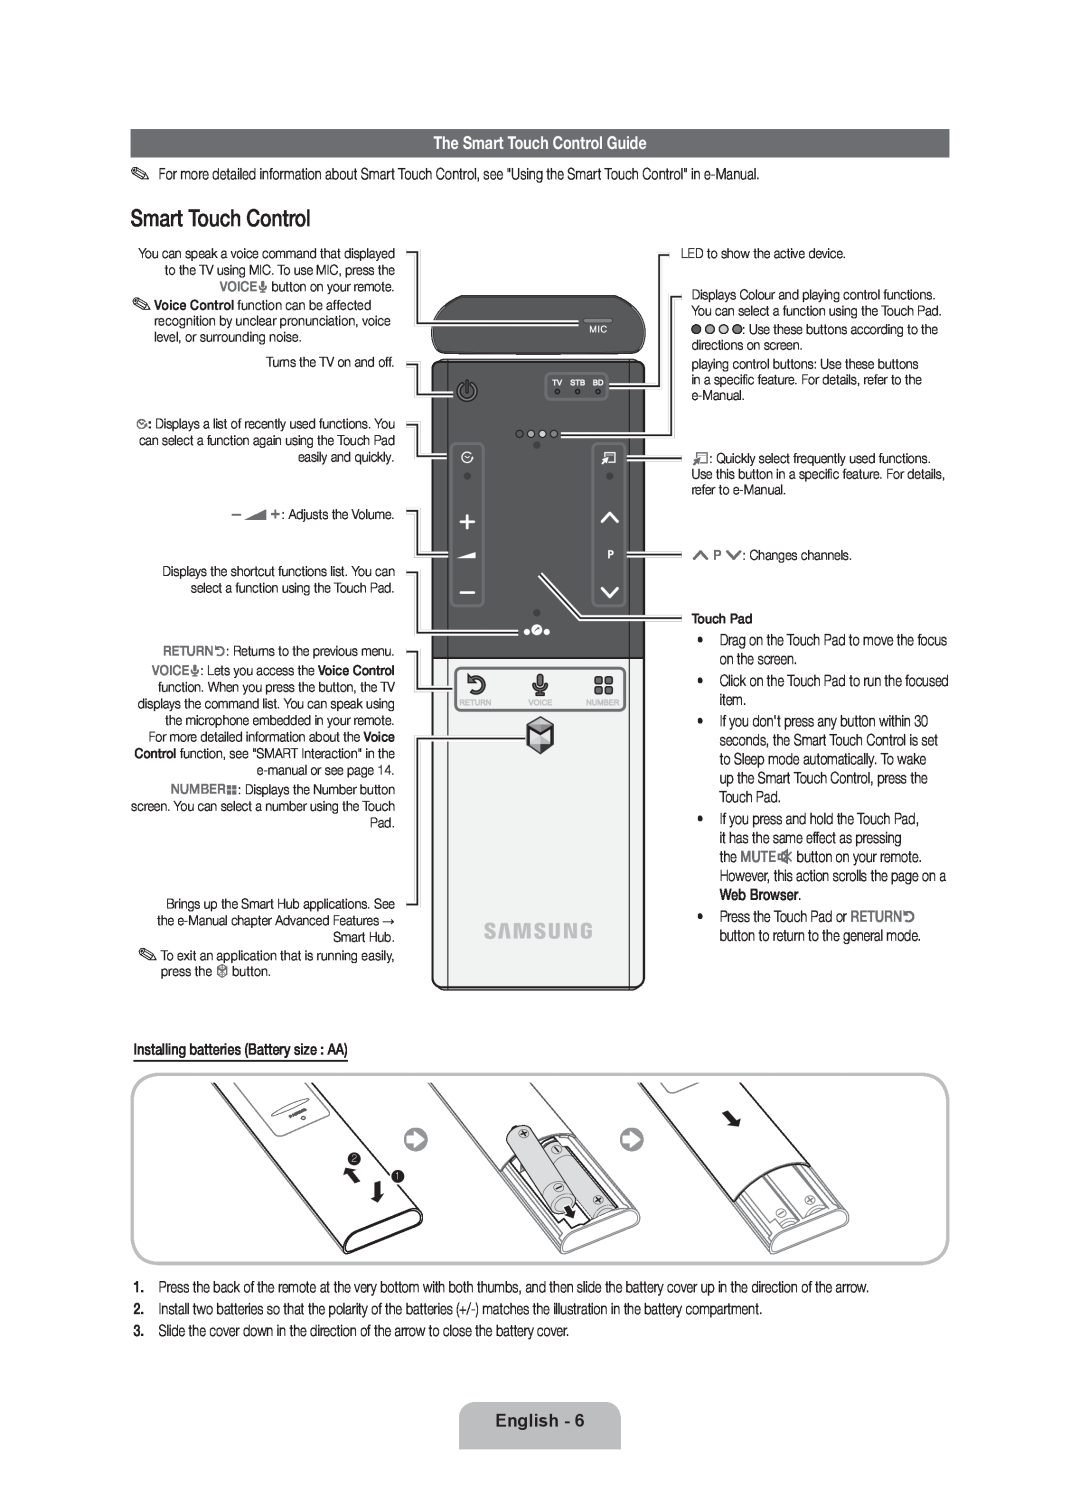 Samsung UE55ES7000SXTK, UE46D7090LSXZG, UE46ES7000SXXC, UE55ES7000SXXH manual The Smart Touch Control Guide, English 